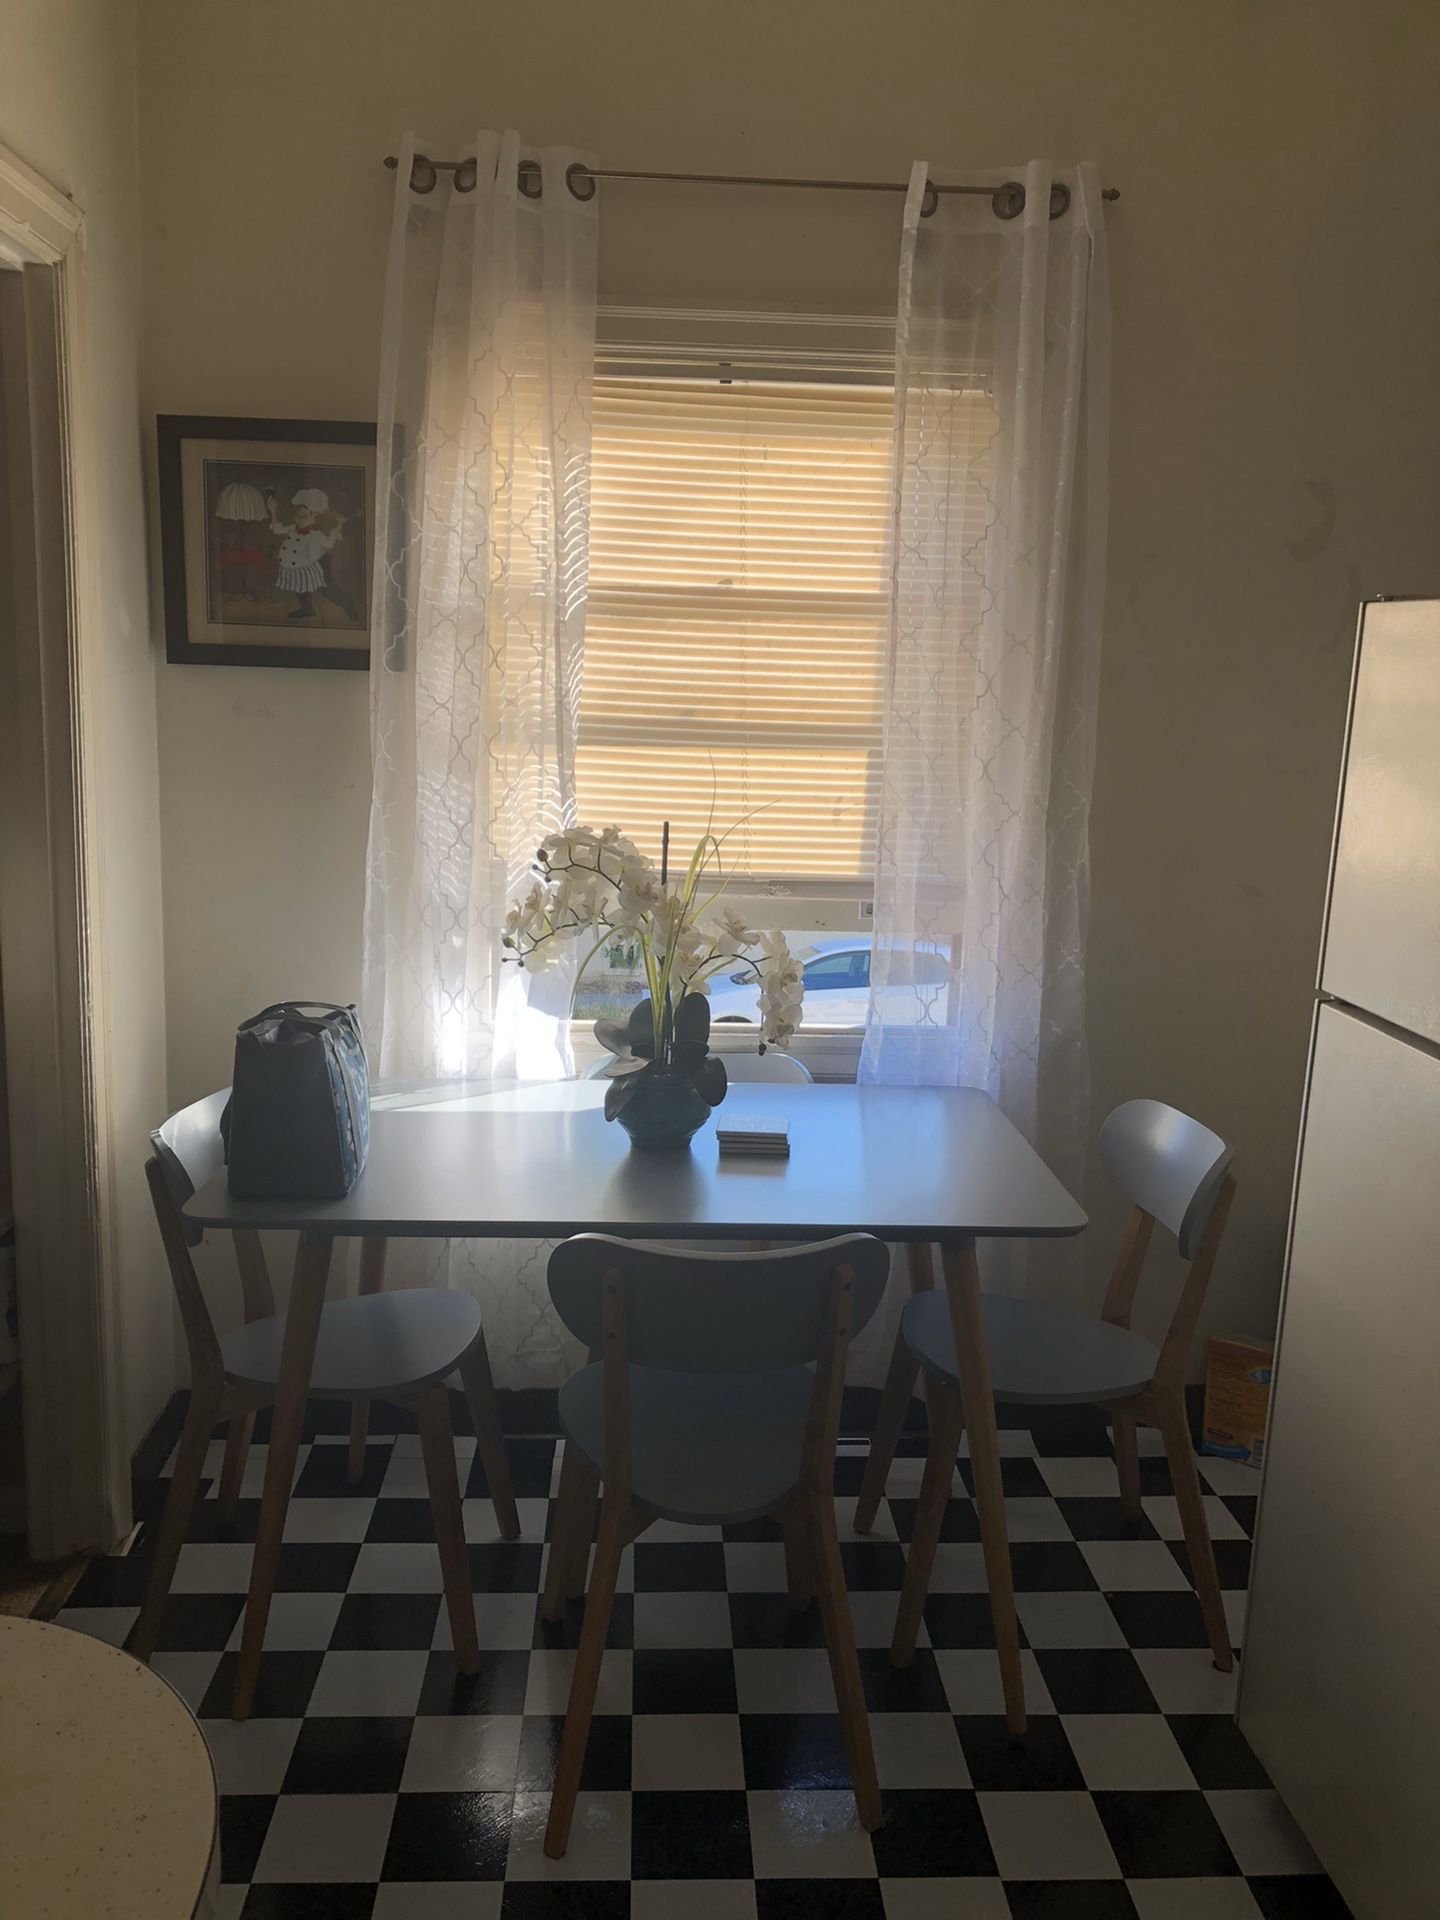 Small kitchen table set